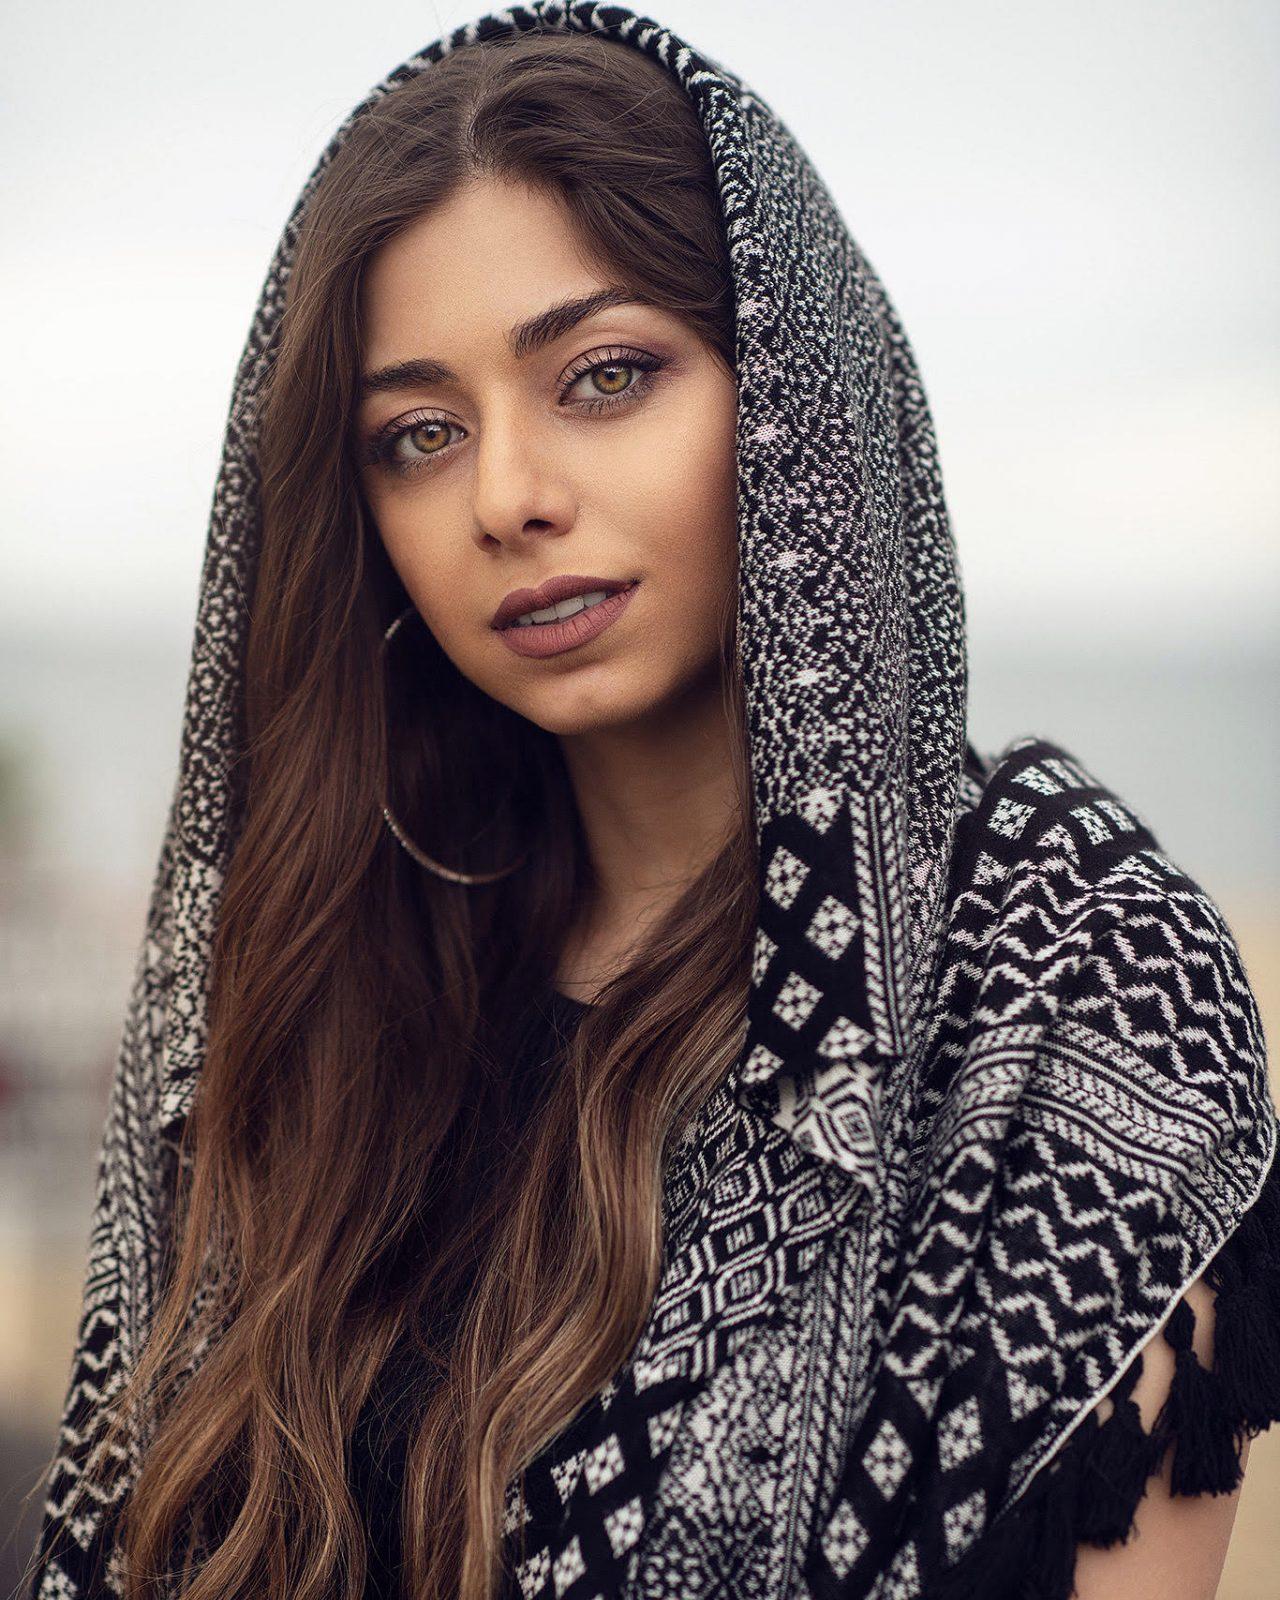 Meet Bahare Salehnia The Iranian Photographer Taking Over